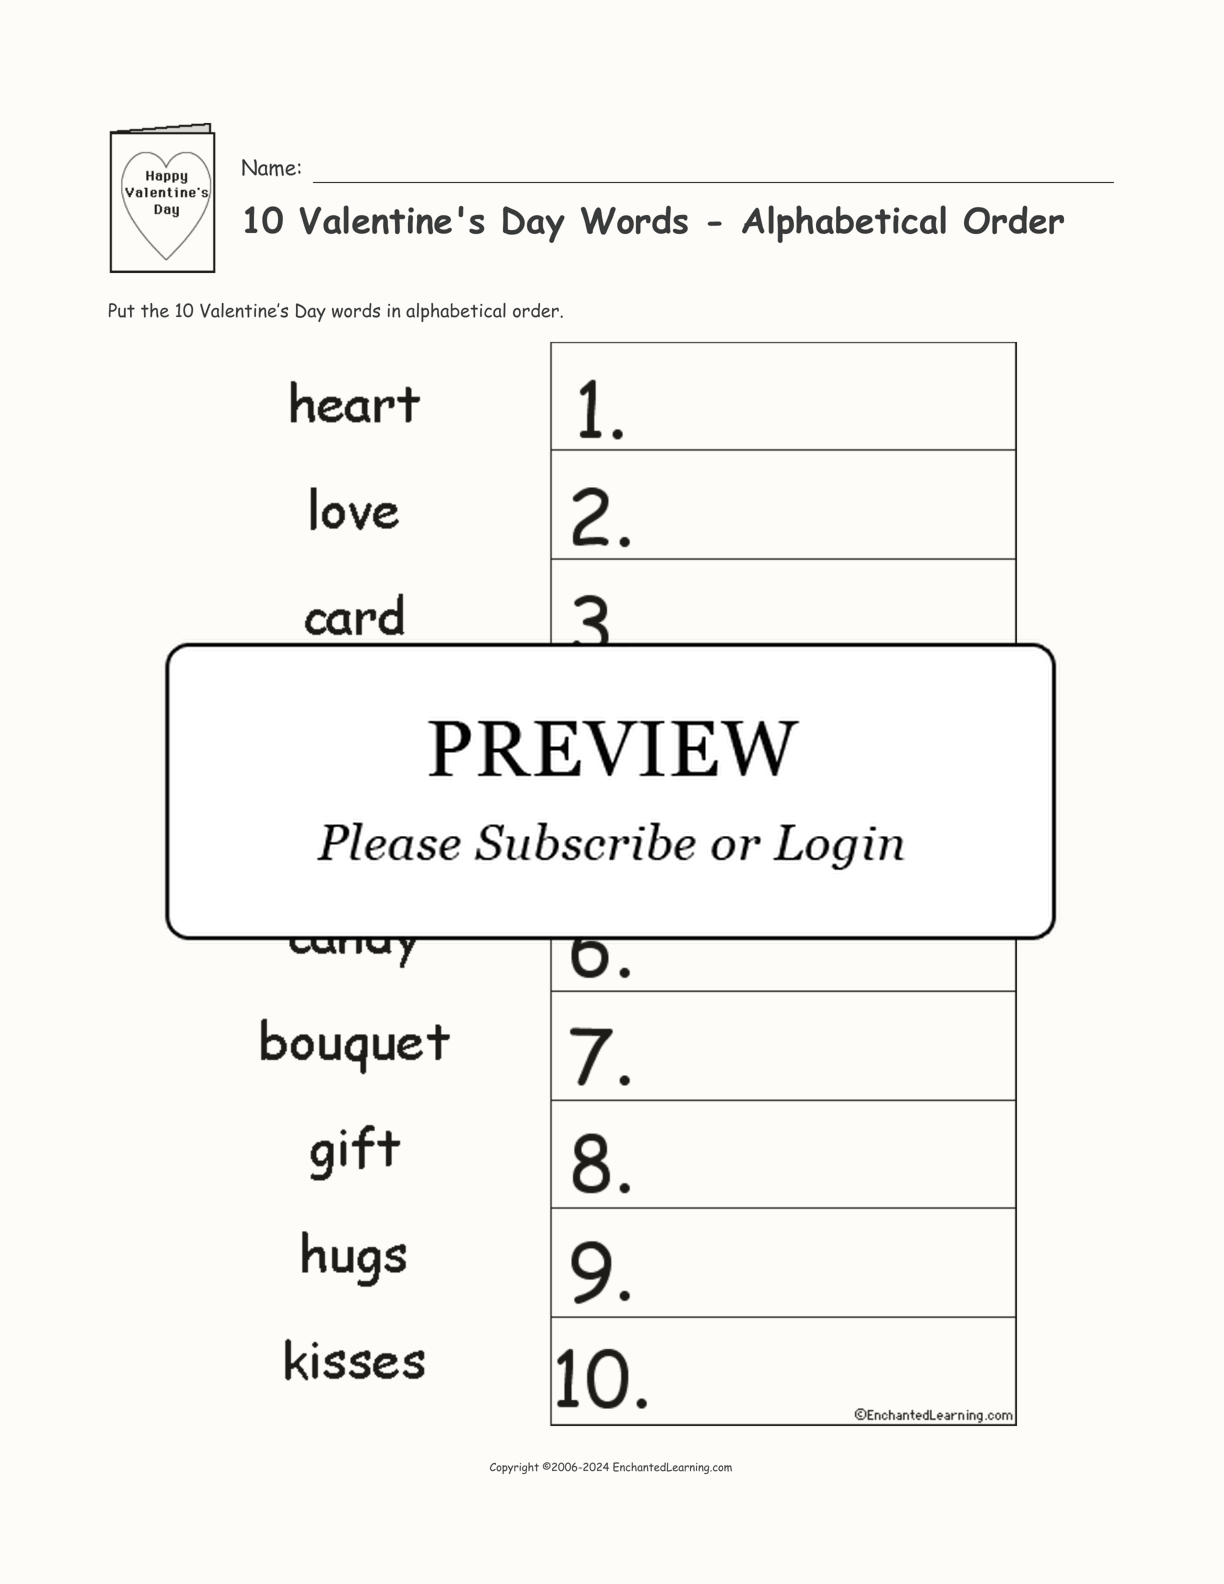 10 Valentine's Day Words - Alphabetical Order interactive worksheet page 1